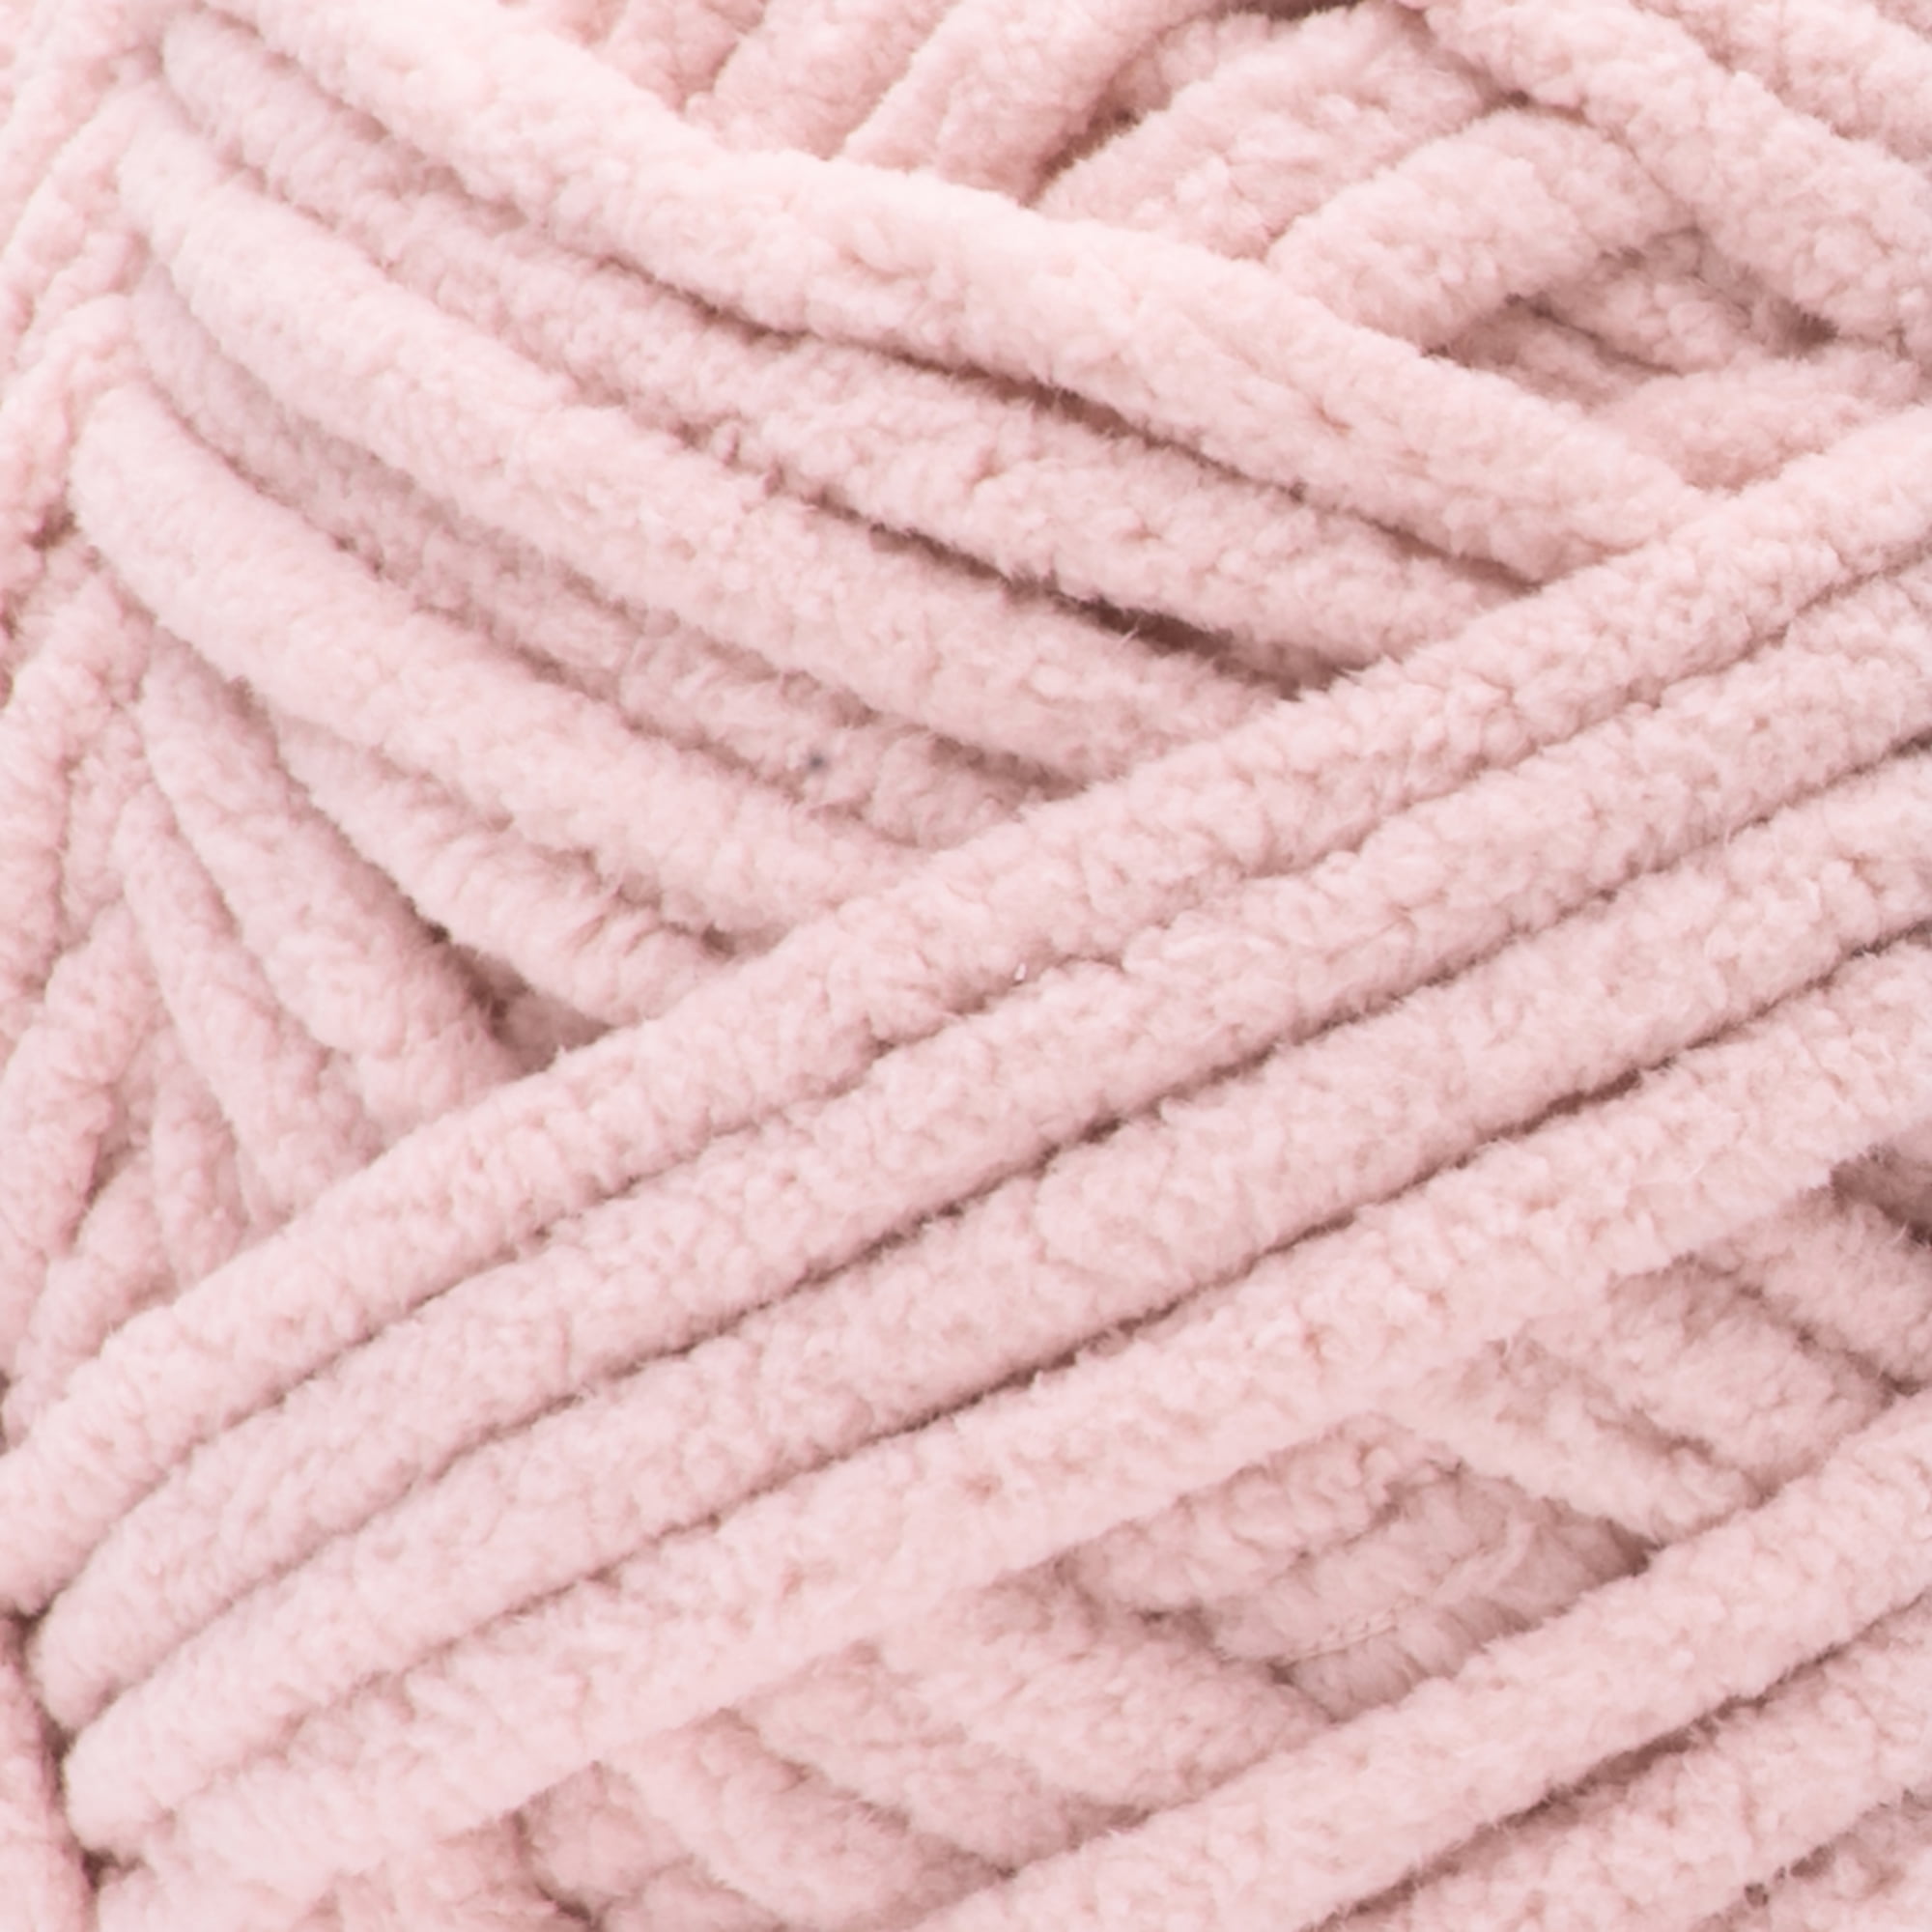 BLUSH PINK 10887 Bernat Blanket Yarn220yds10.5 Oz300g Super Bulky 6 Light  Pinkyarn Crochet knitting Yarn Supply Dcoyshouseofyarn 